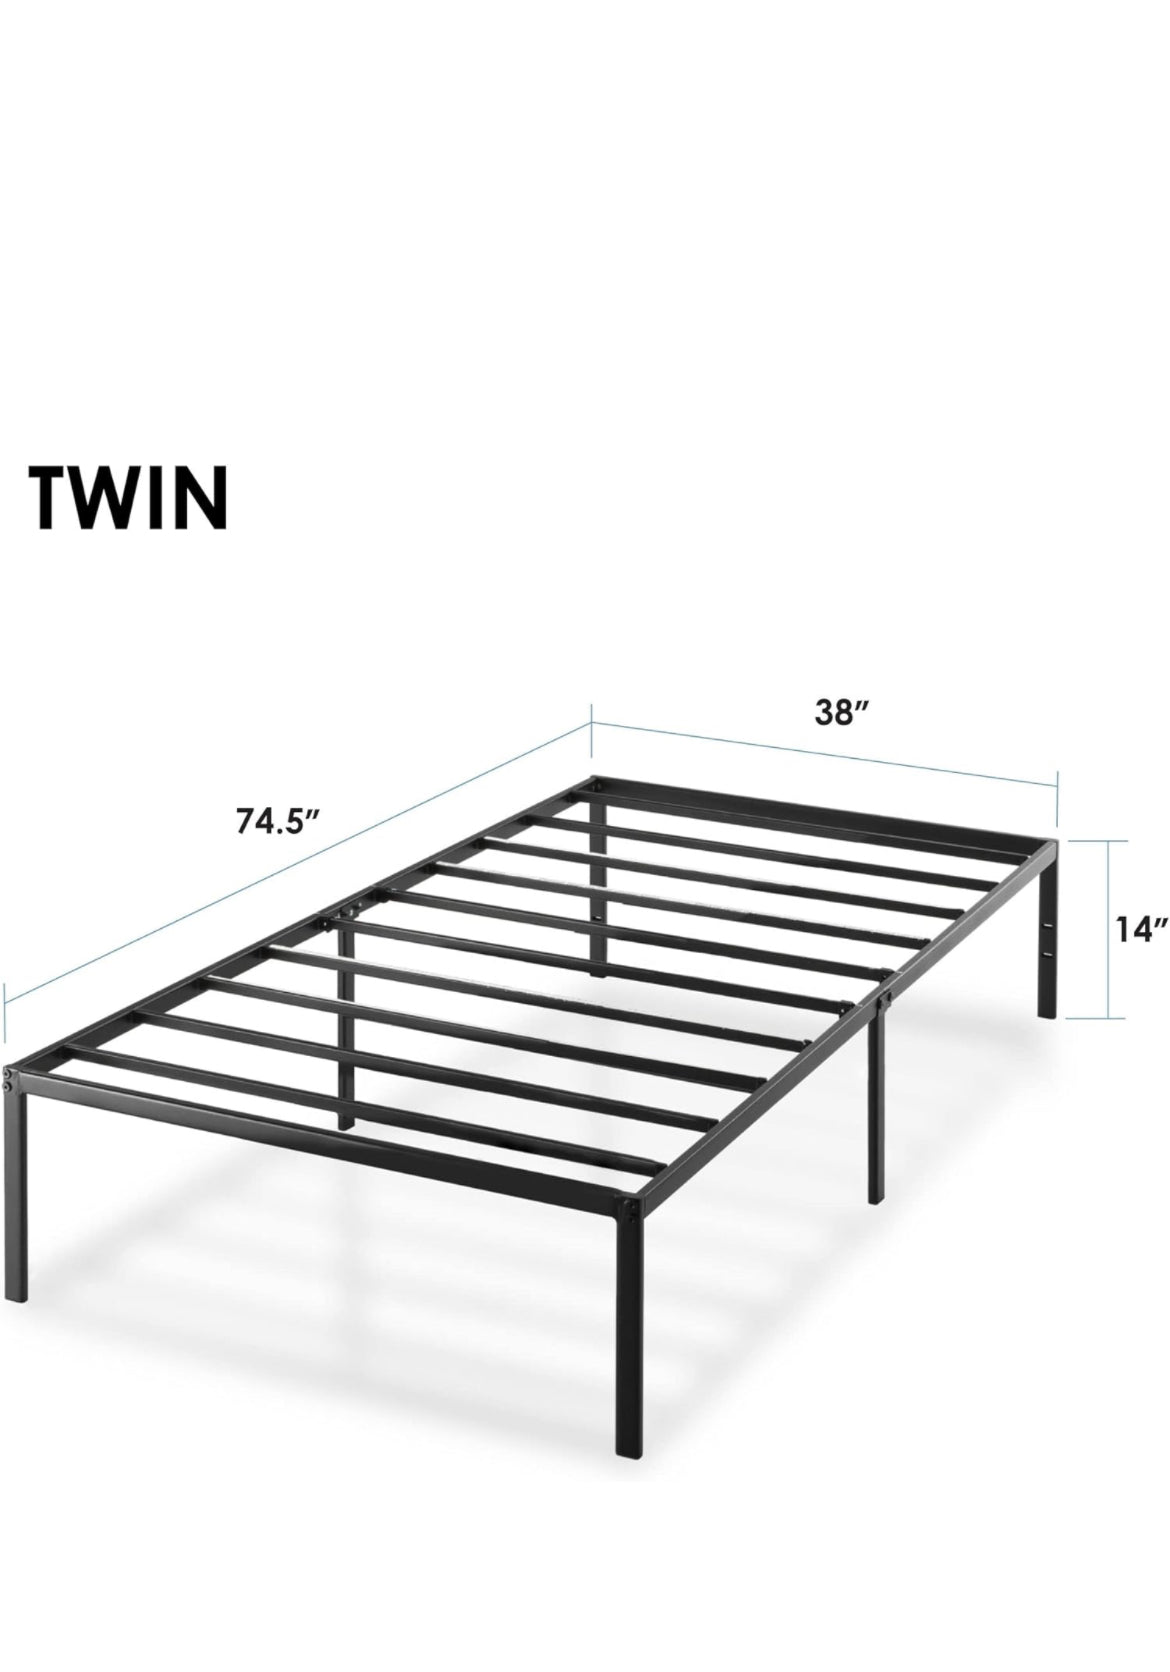 Twin Size - Best Price Mattress 14-Inch Metal Platform Beds w/ Heavy Duty Steel Slat Mattress Foundation (No Box Spring Needed), Black